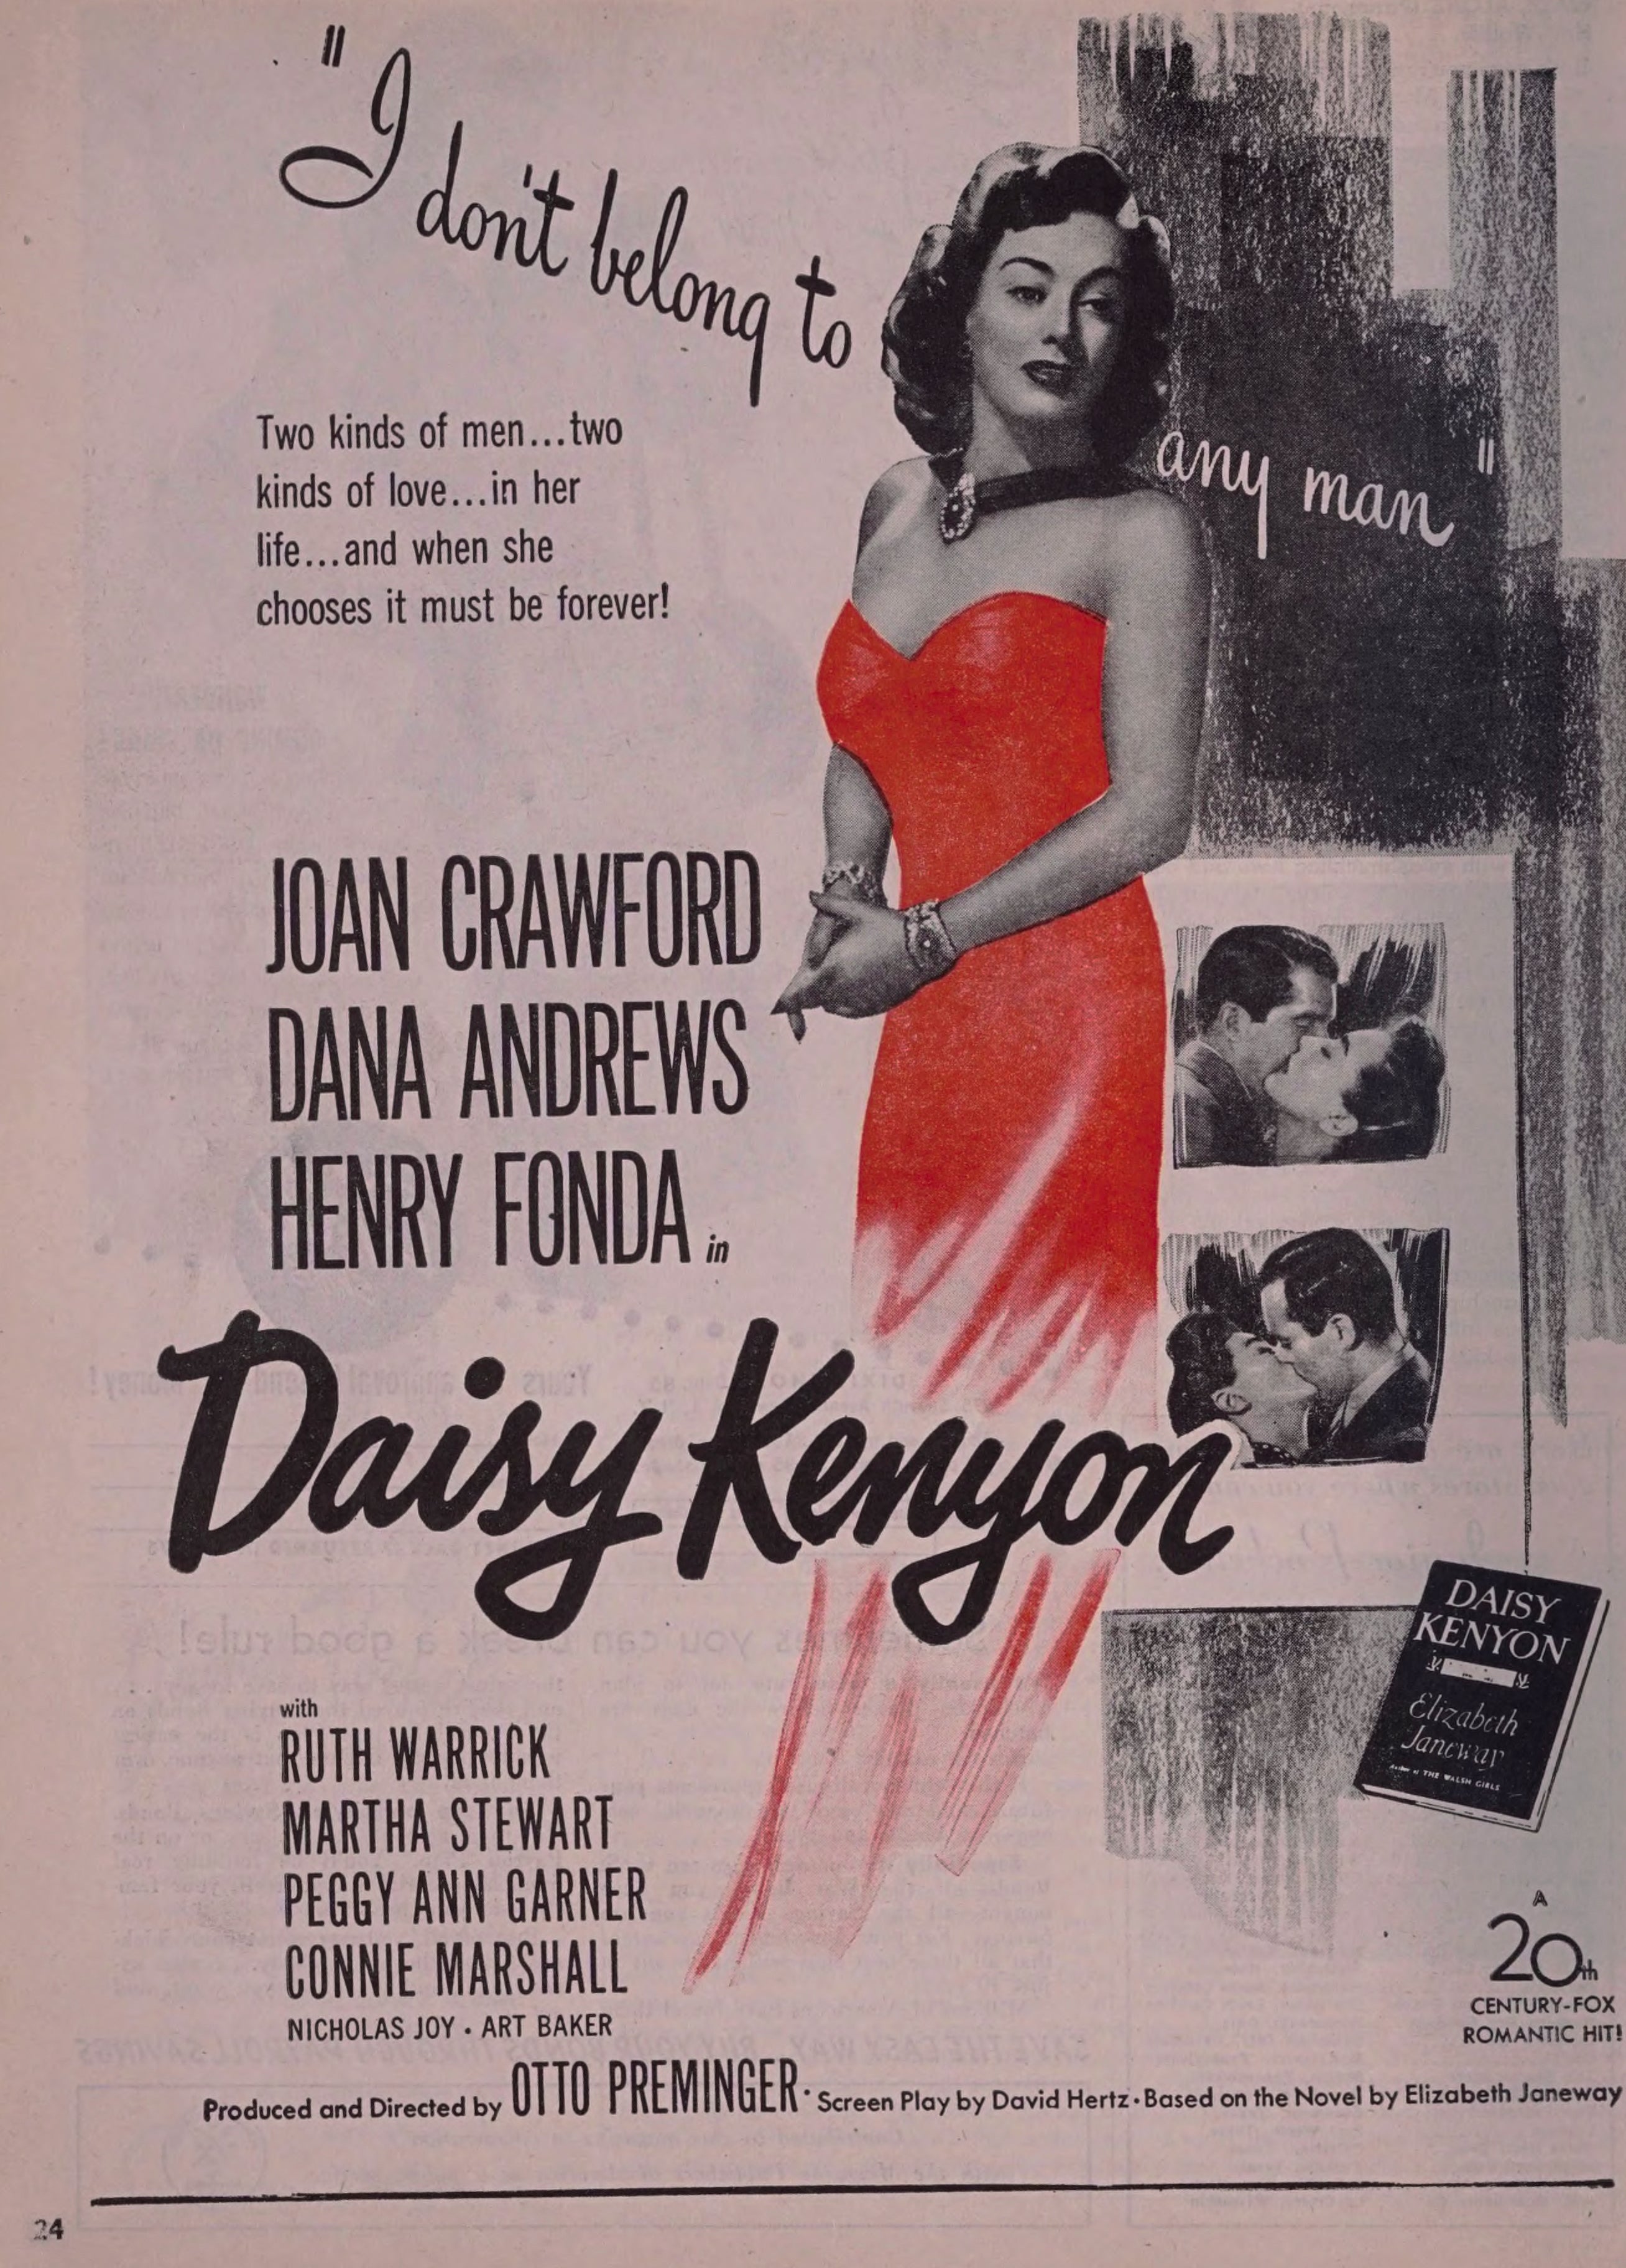 Daisy Kenyon (1947) | www.vintoz.com